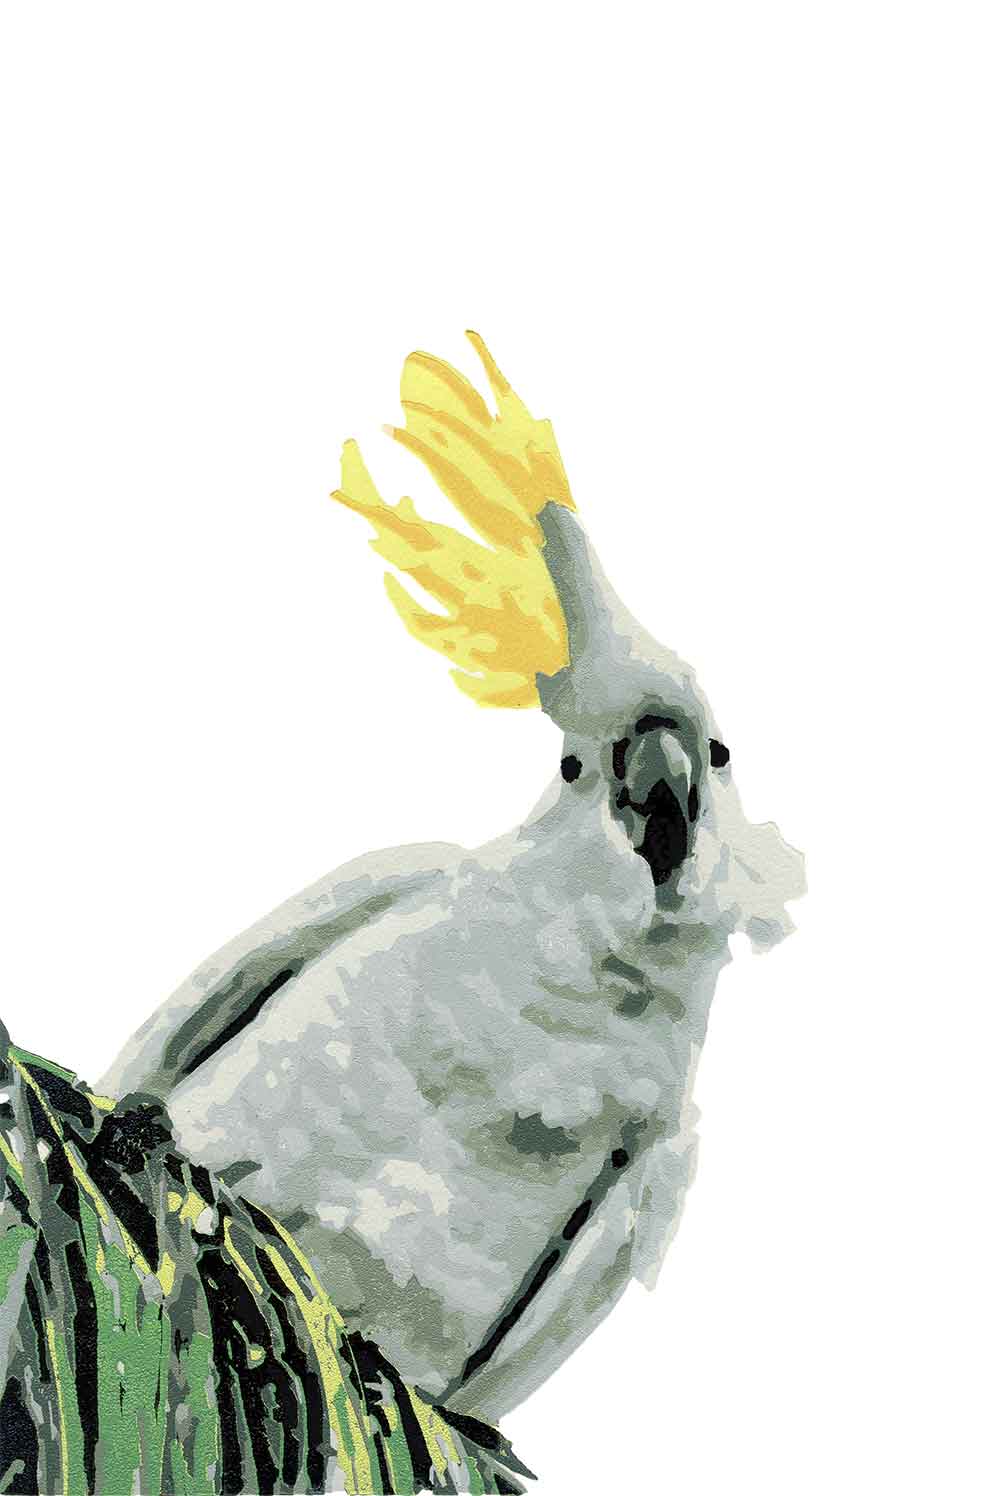 Ruffled Feathers - reduction linocut, Kim herringe